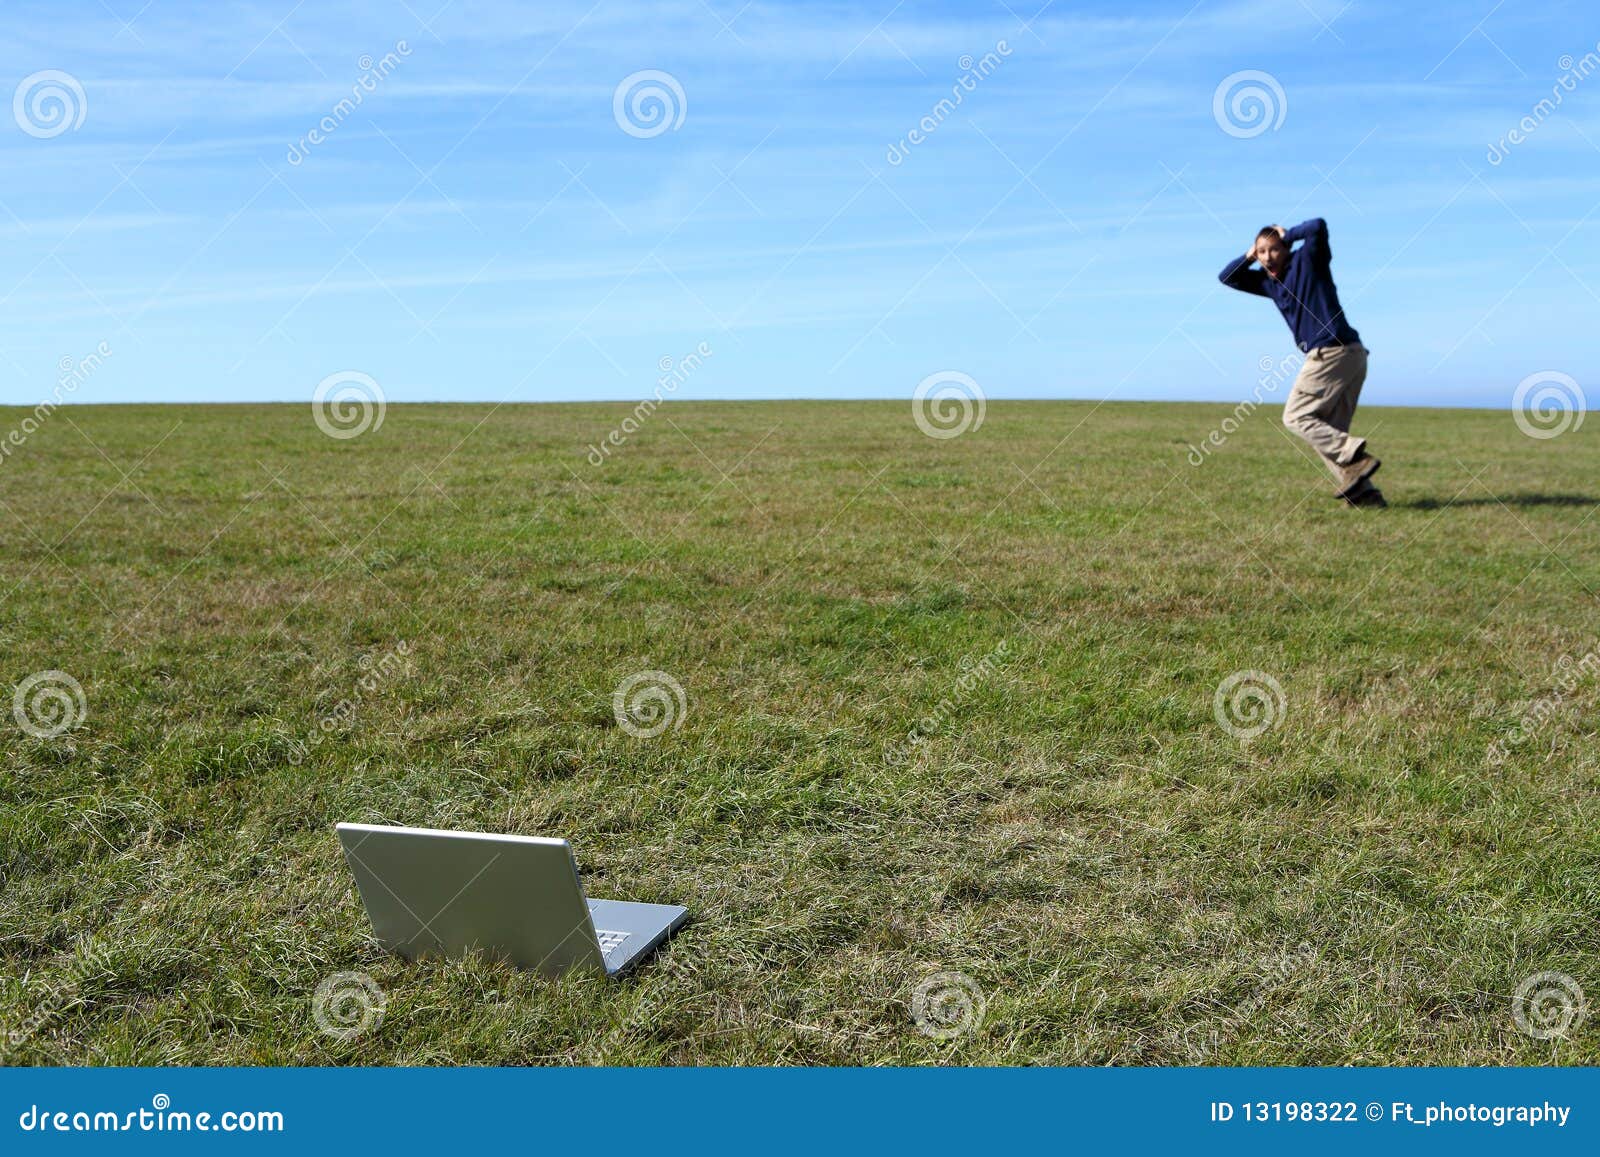 overwhelmed man running in field away from laptop